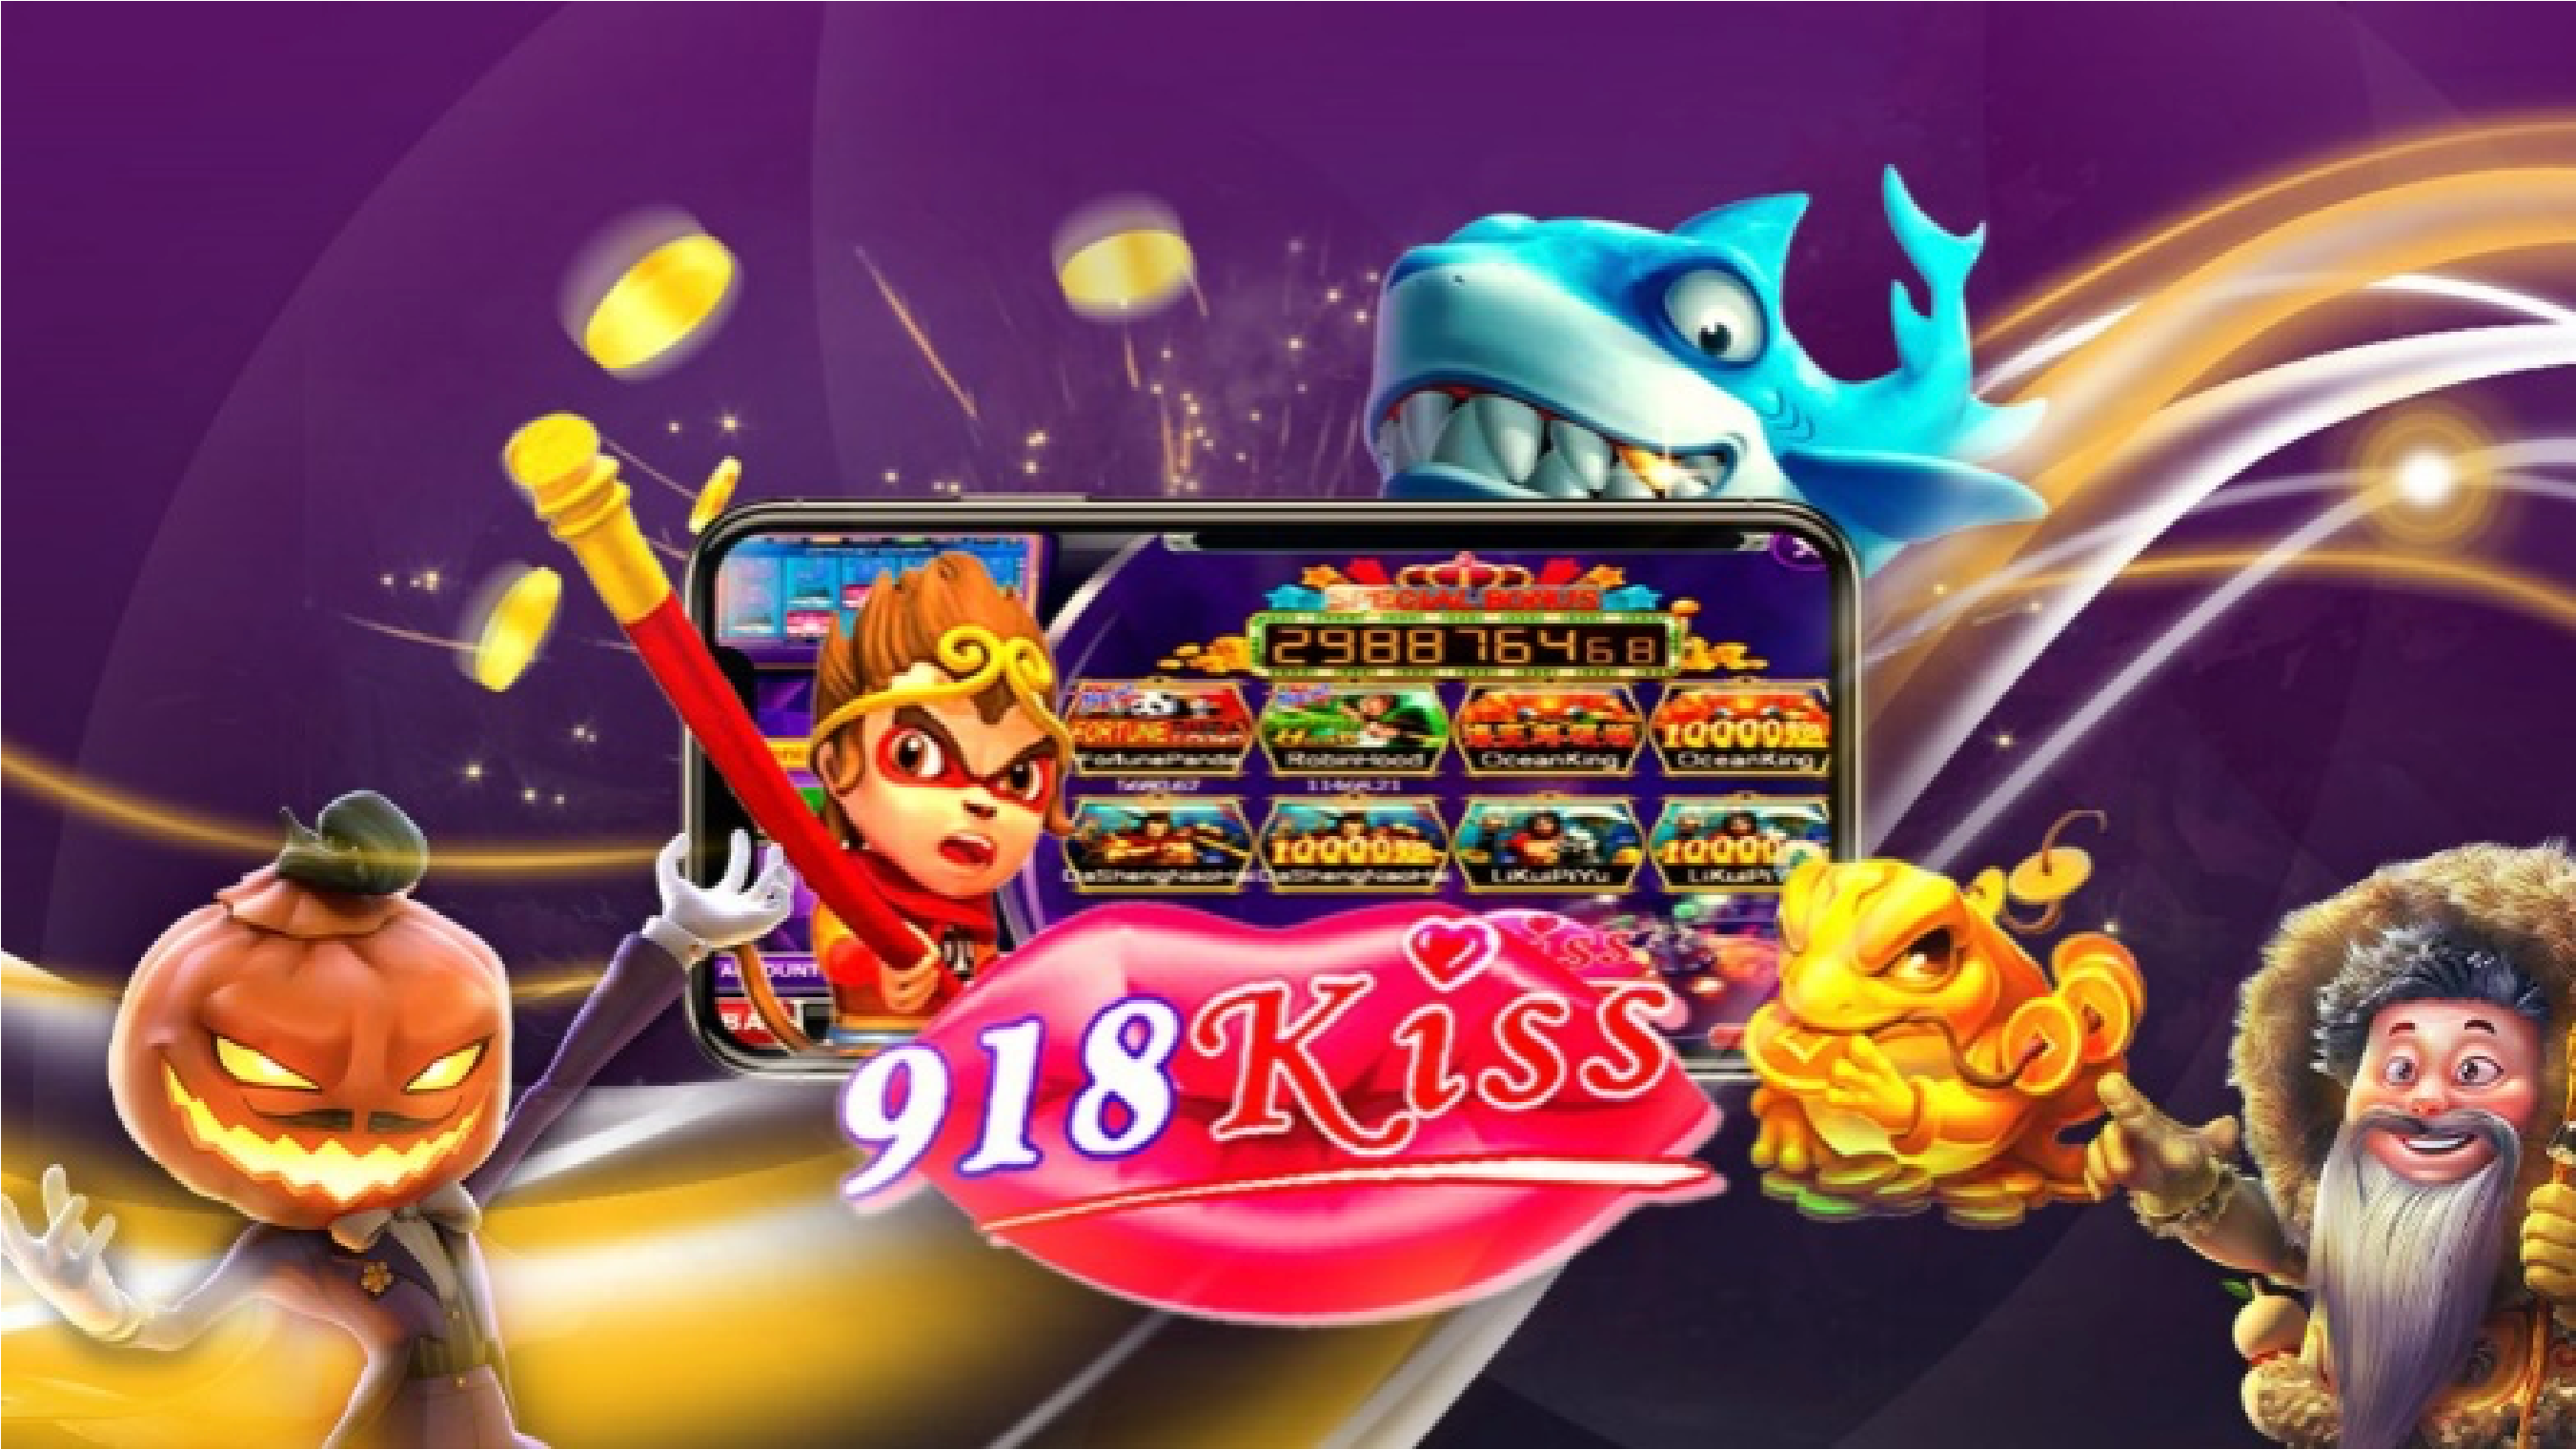 918kiss slot game background photo